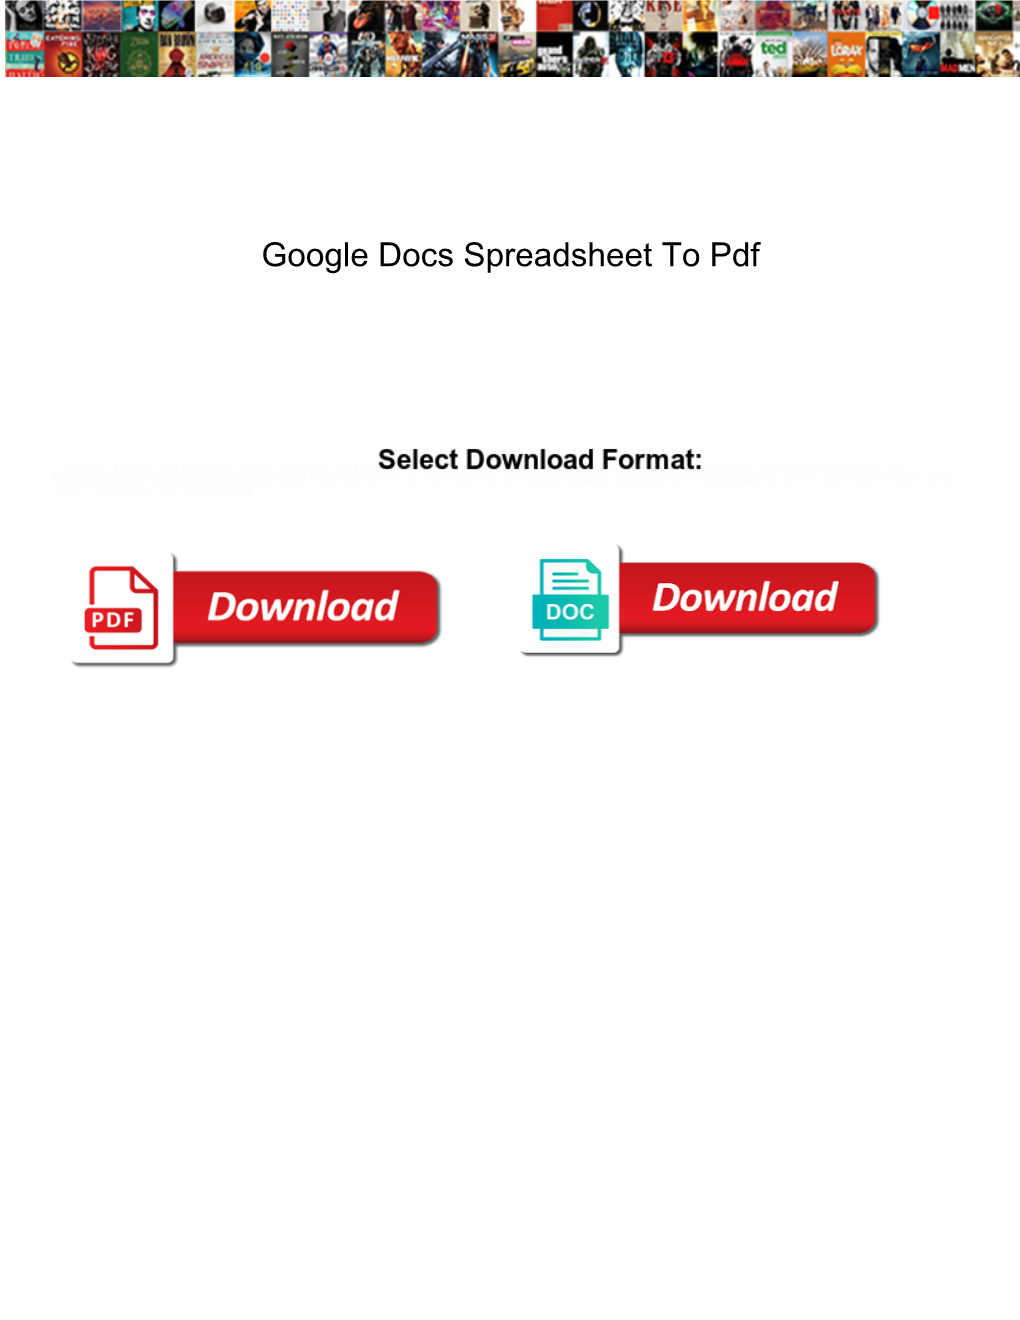 Google Docs Spreadsheet to Pdf